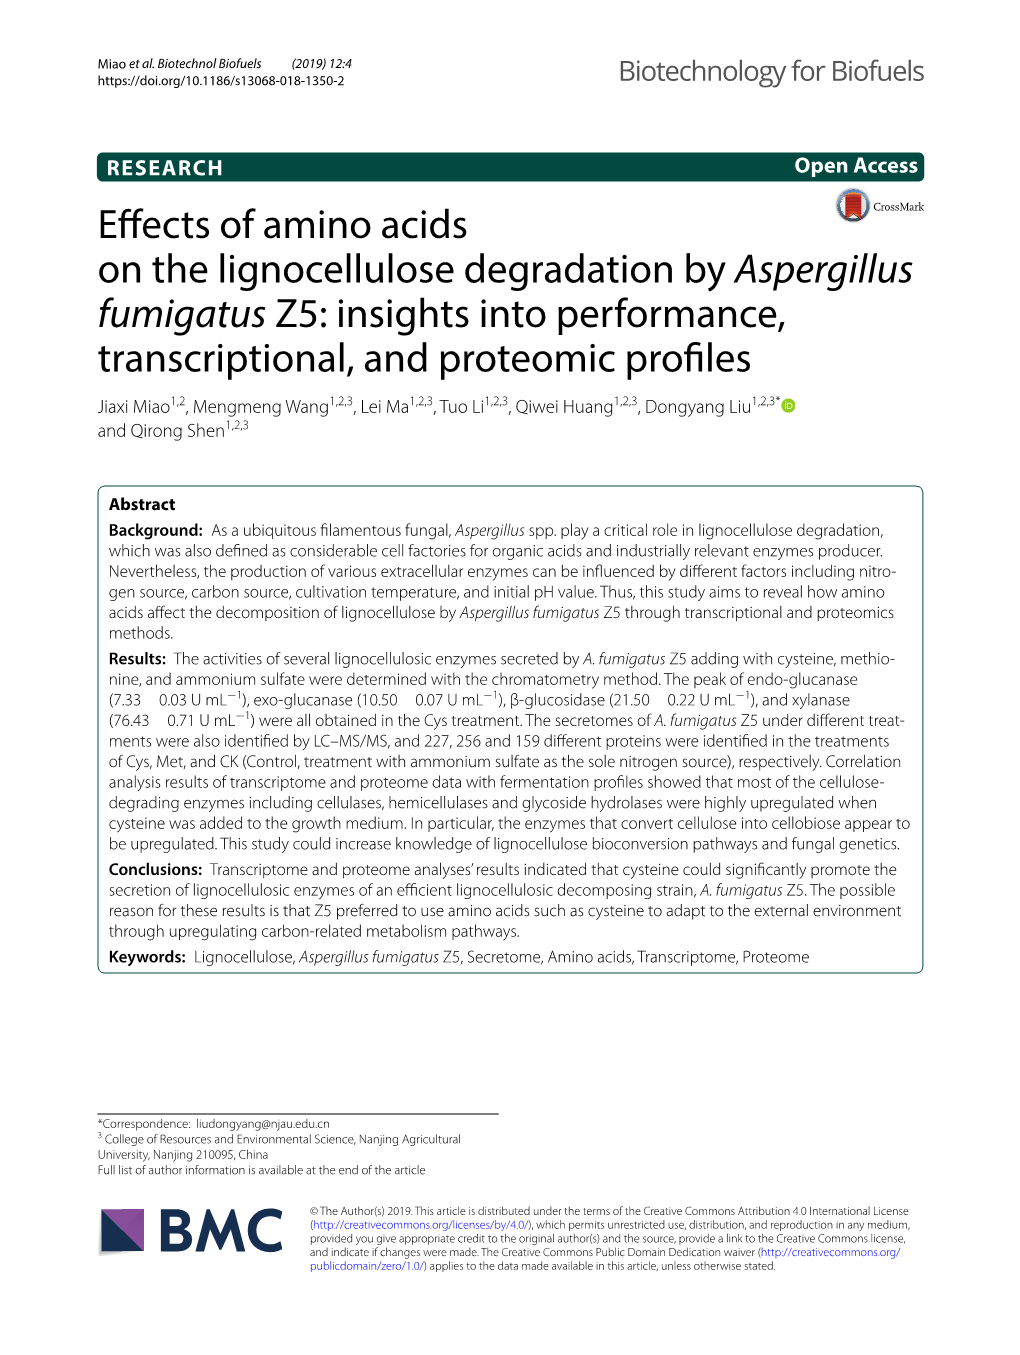 Effects of Amino Acids on the Lignocellulose Degradation by Aspergillus Fumigatus Z5